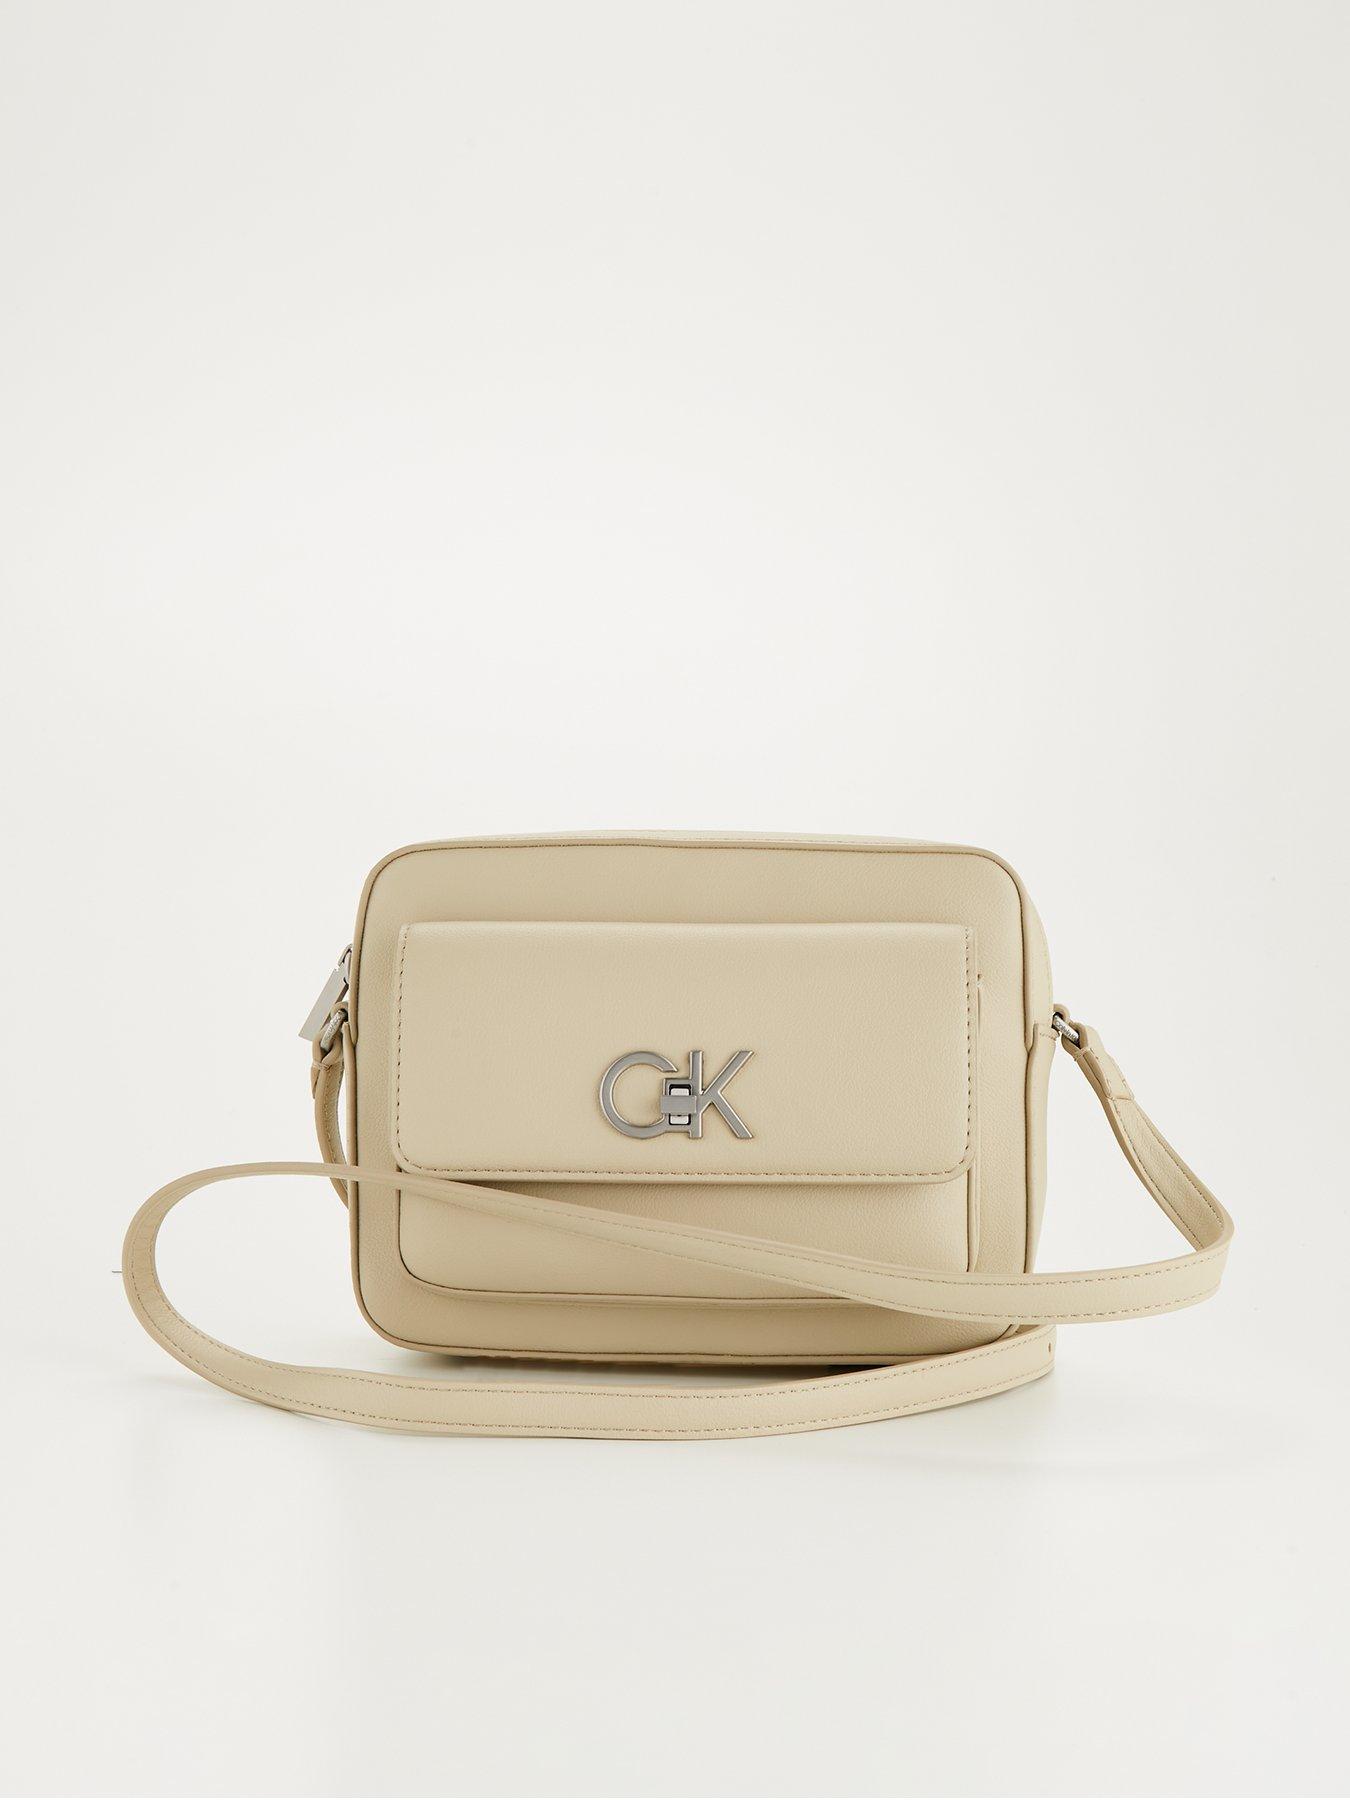 Calvin Klein Women's Re-Lock Double Shouder Bag